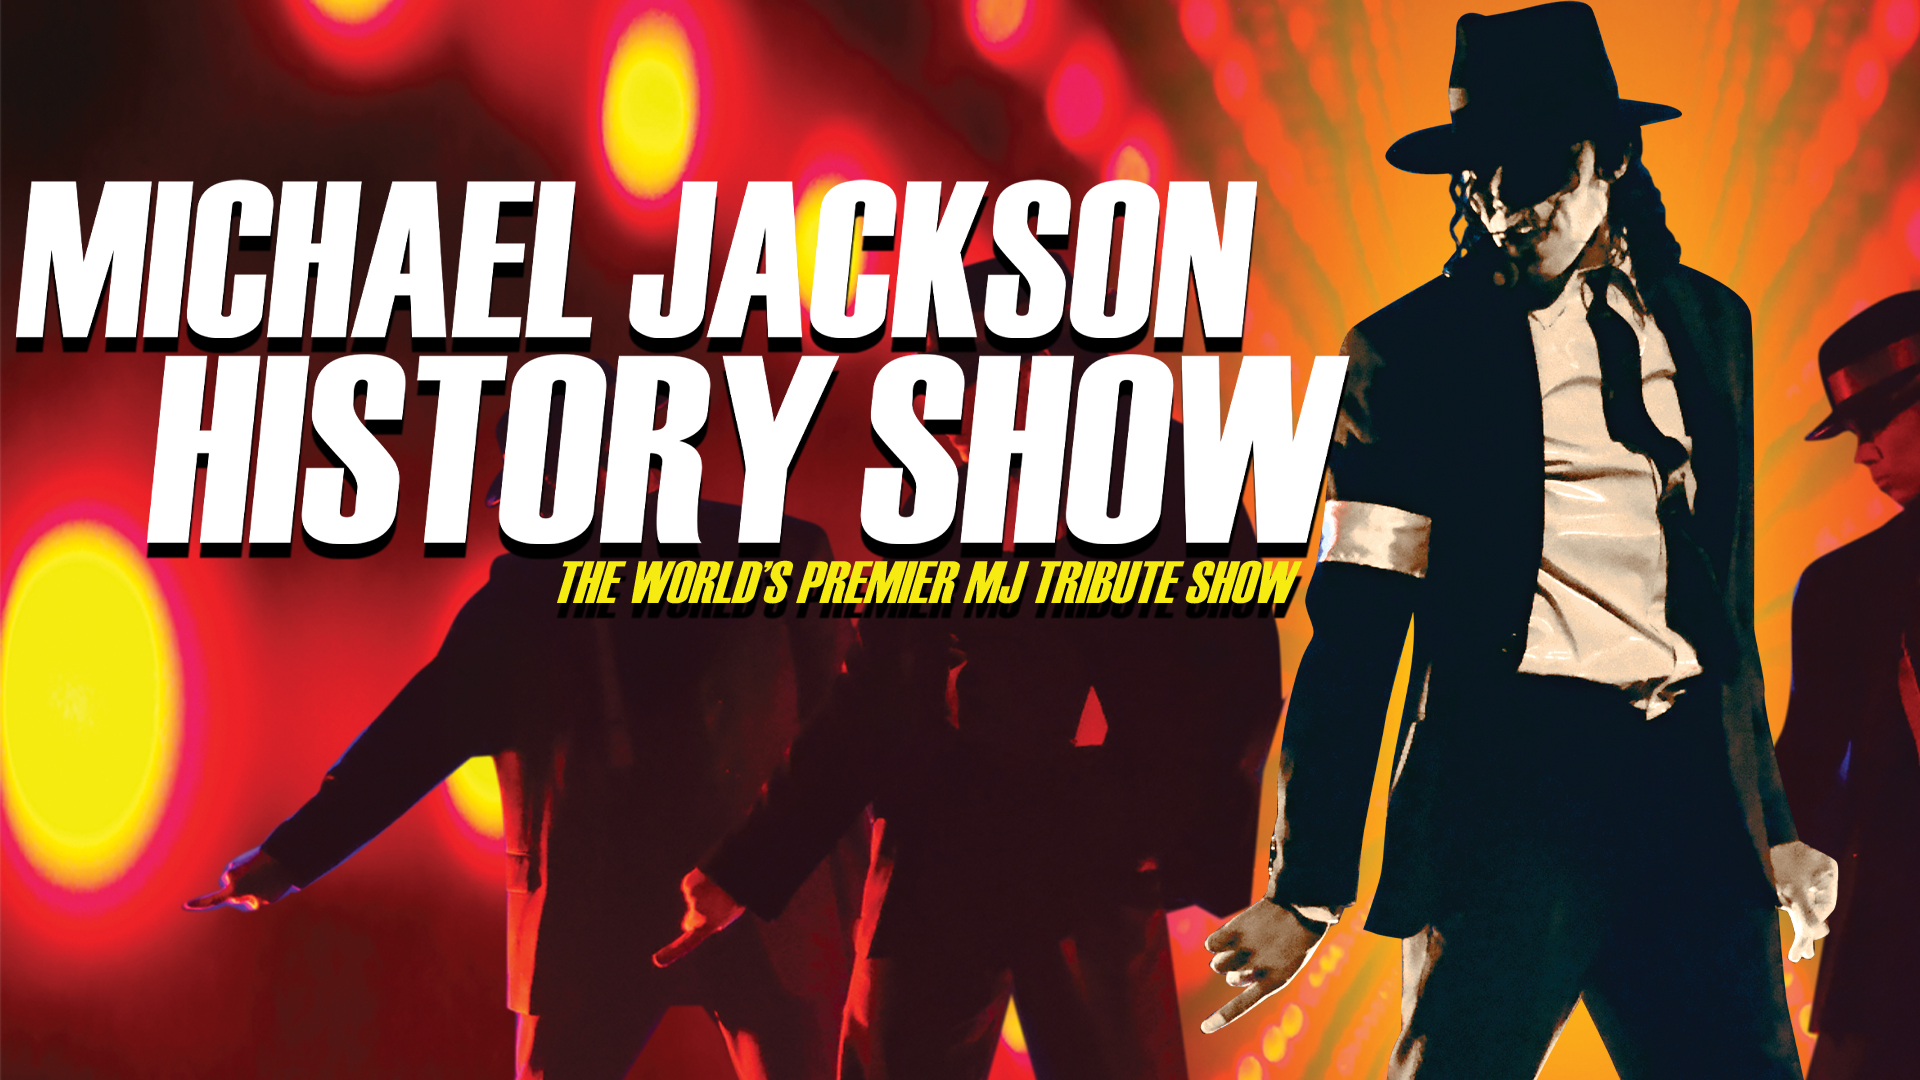 Honouring Michael Jackson’s legacy